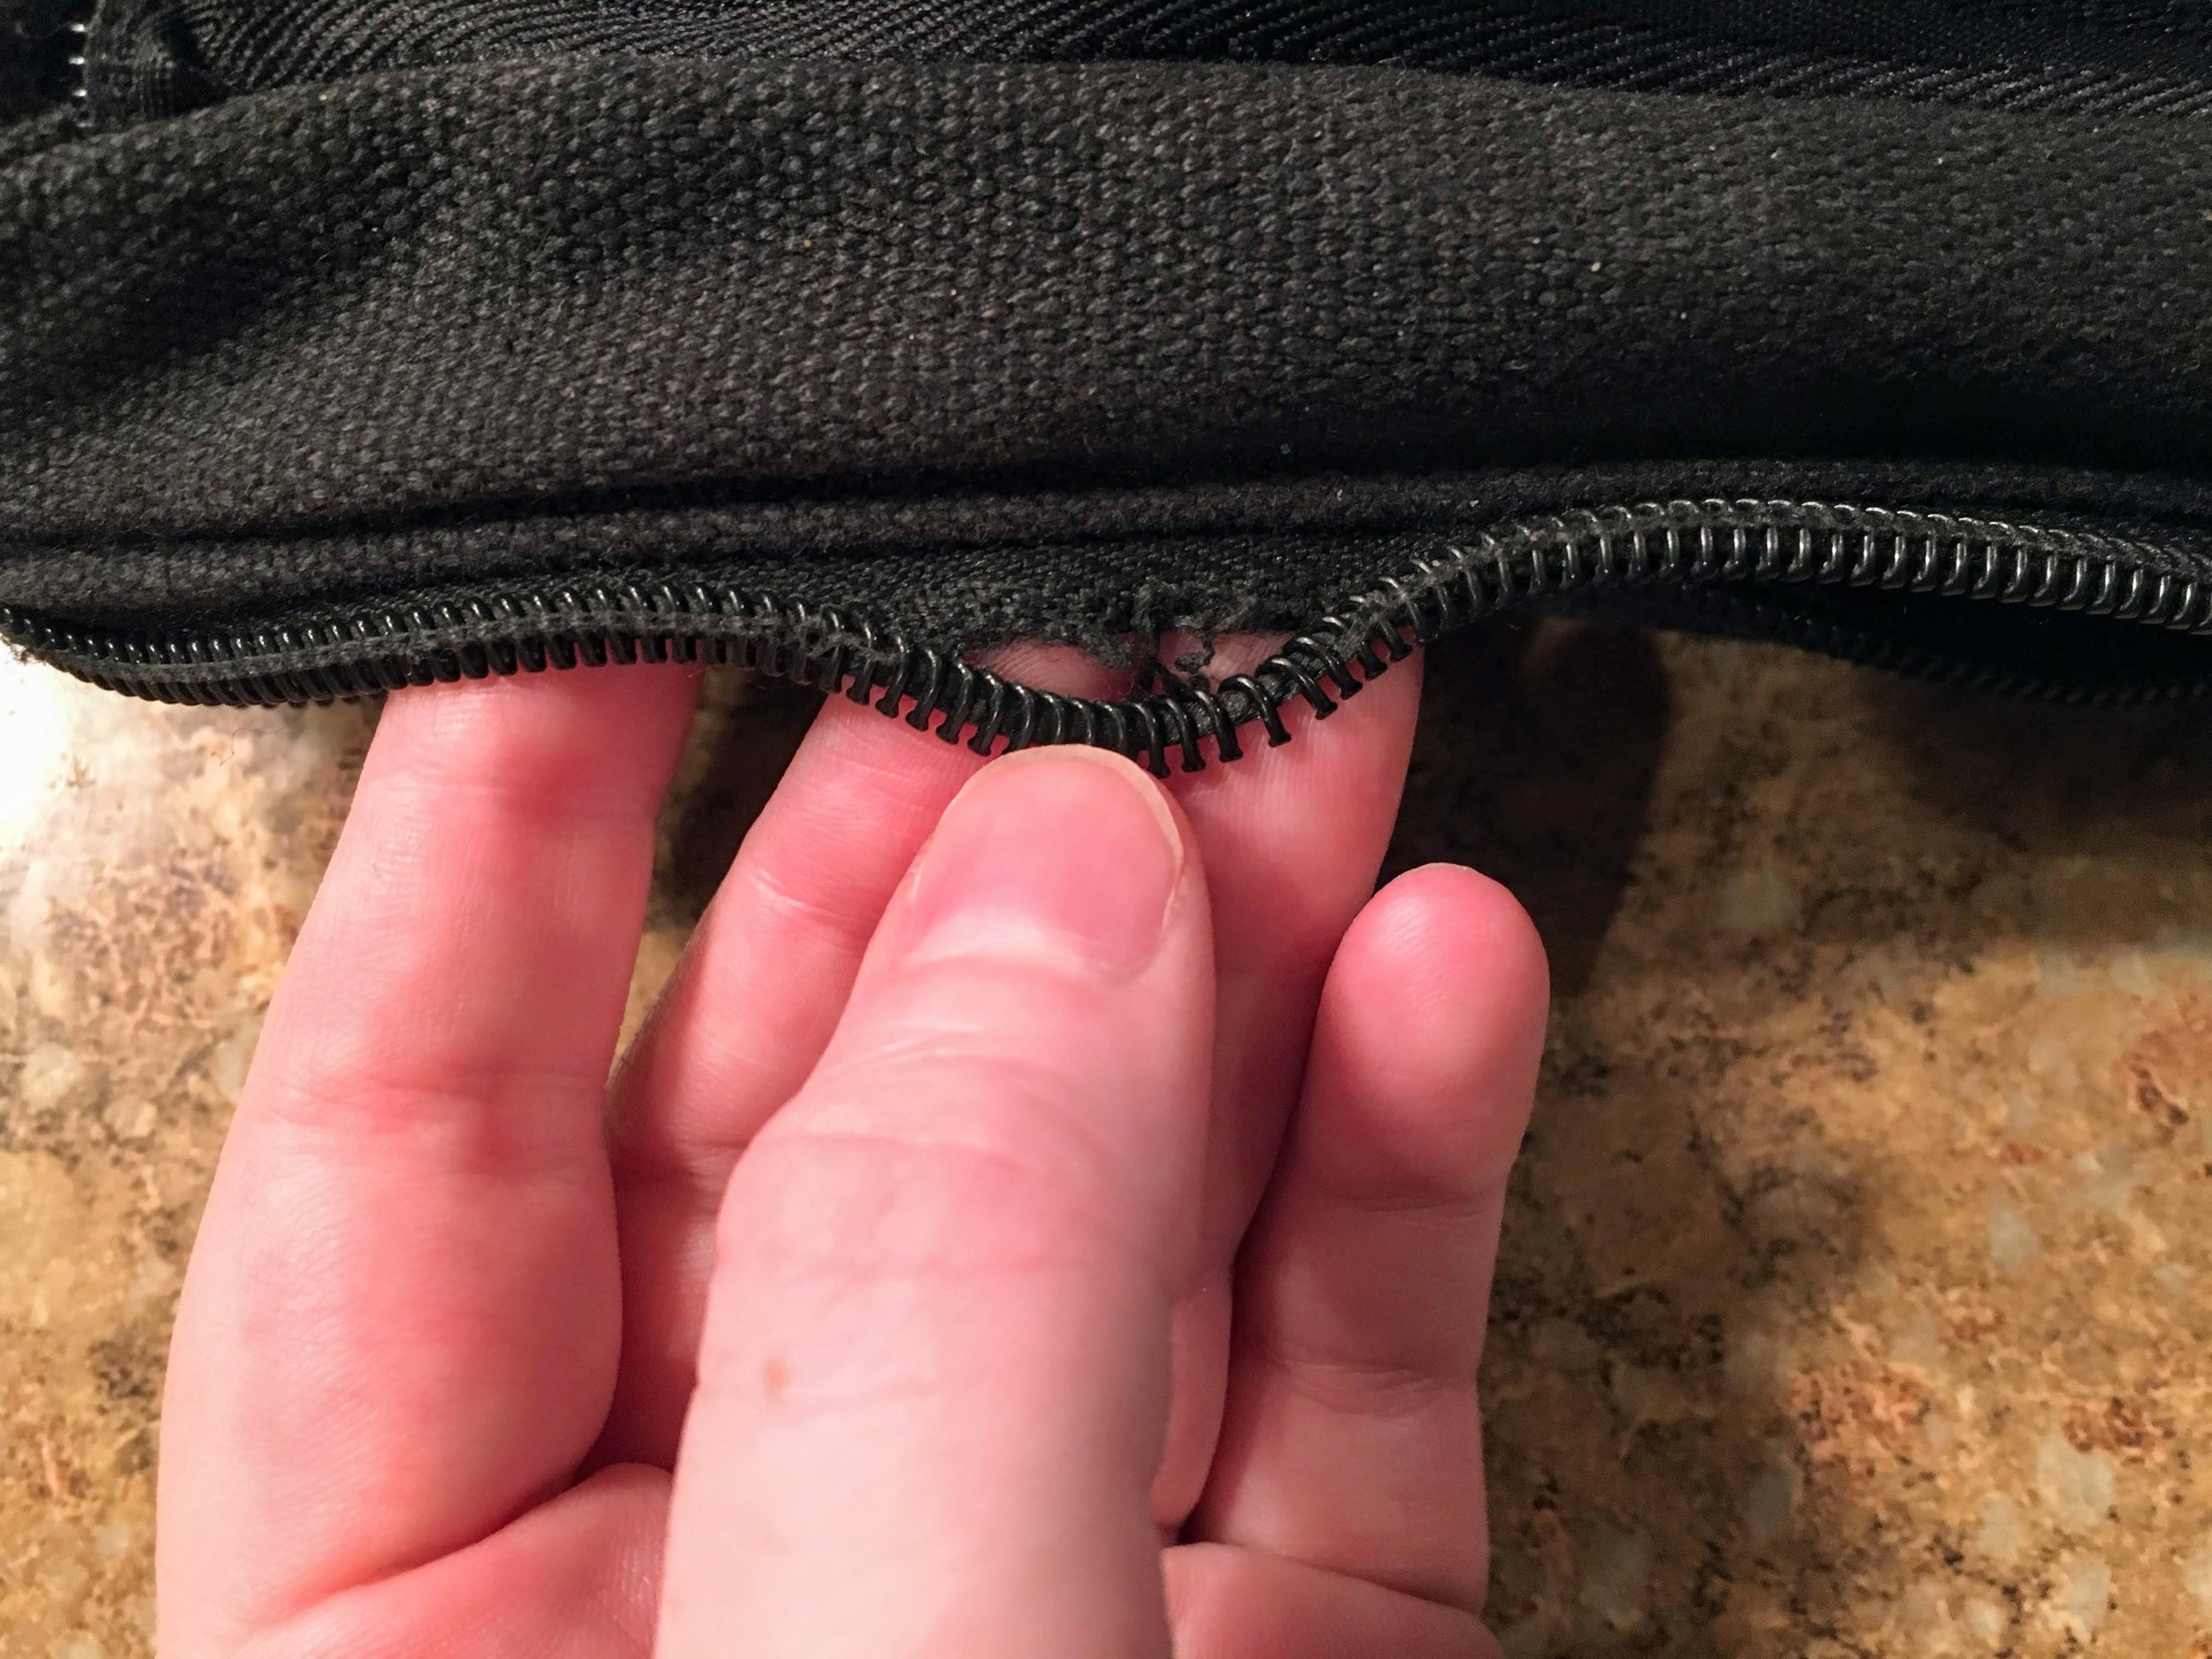 How to Quickly Repair a Broken Zipper